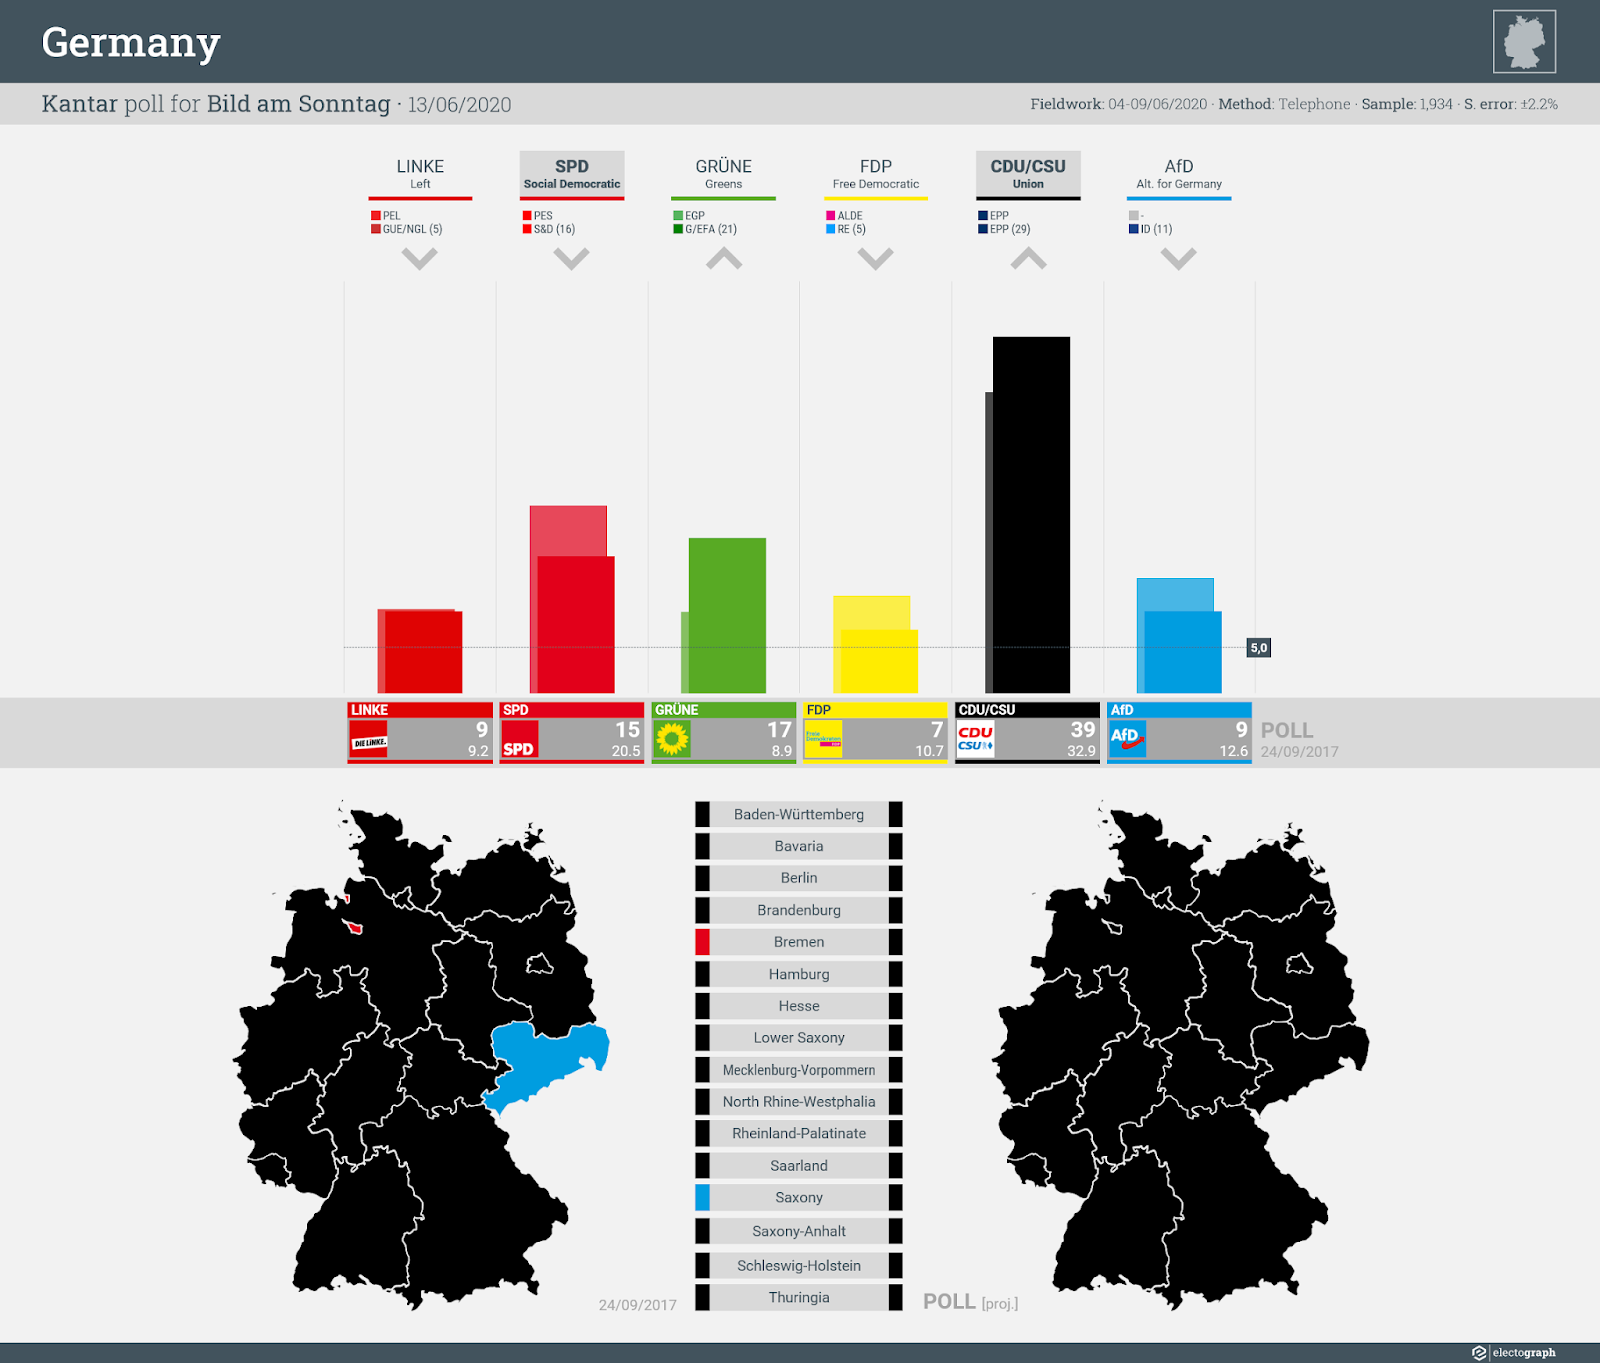 GERMANY: Kantar poll chart for Bild am Sonntag, 13 June 2020